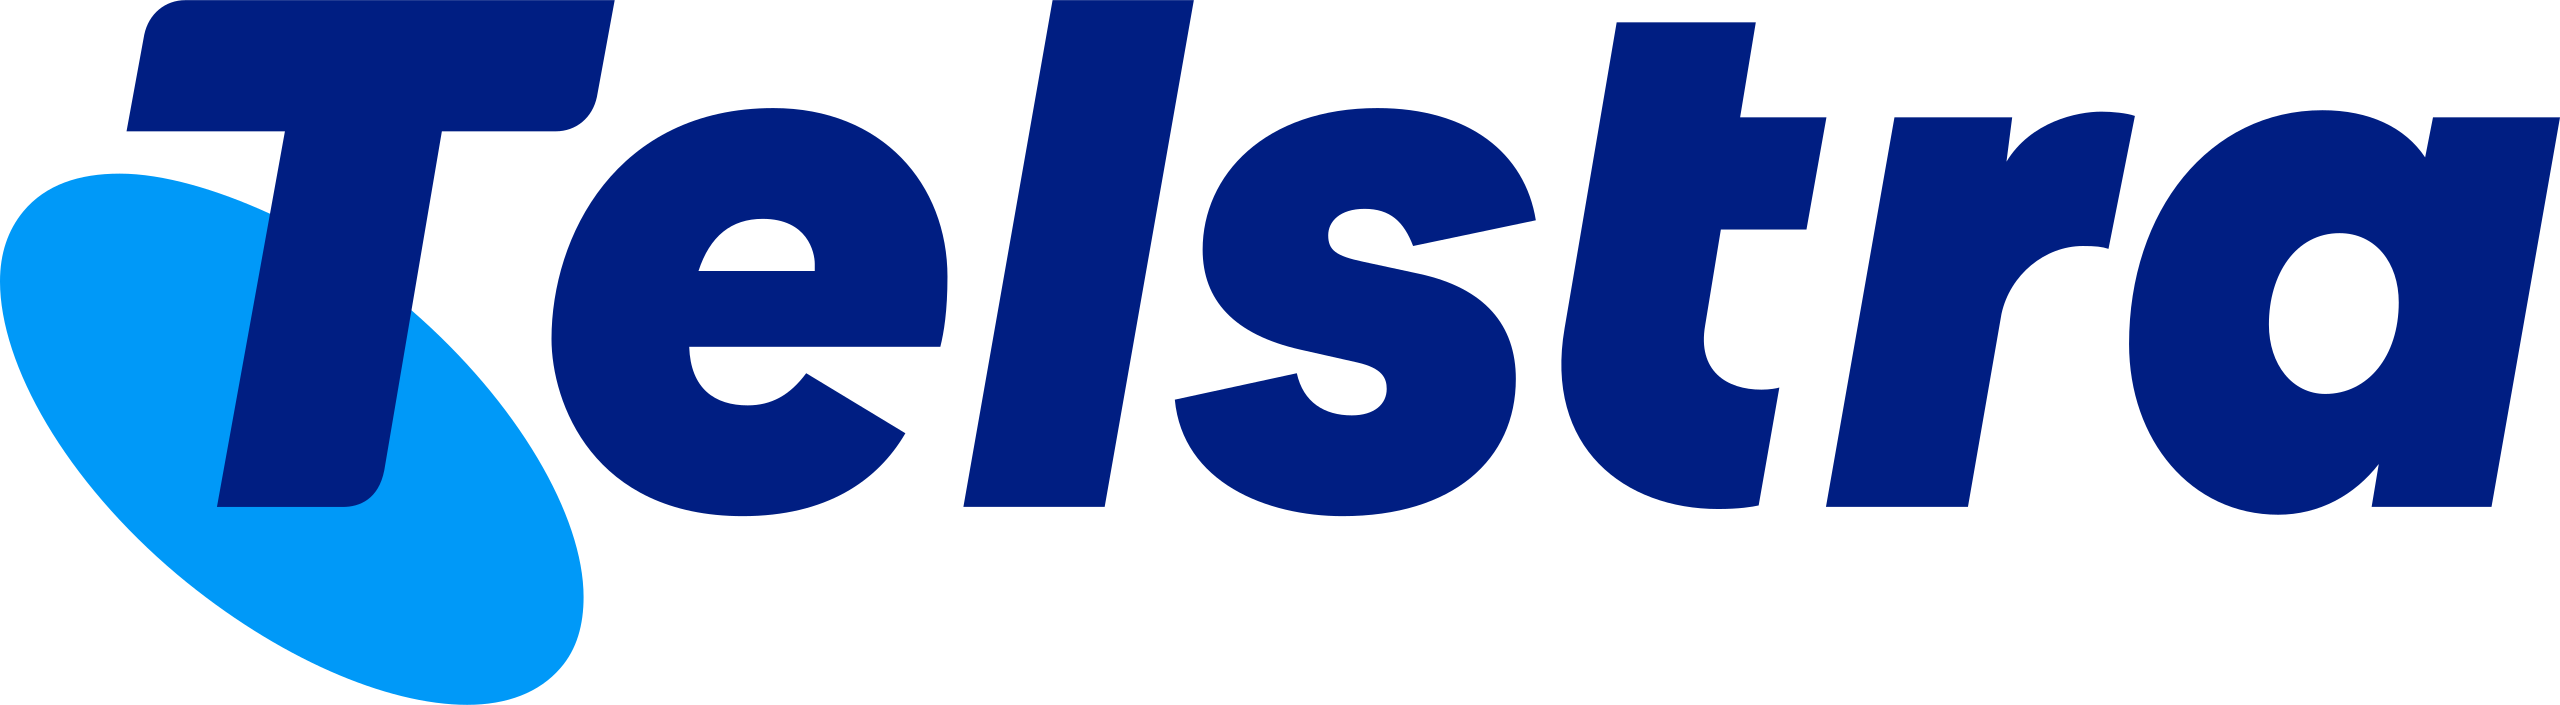 Telstra_logo_(horizontal_variant).svg